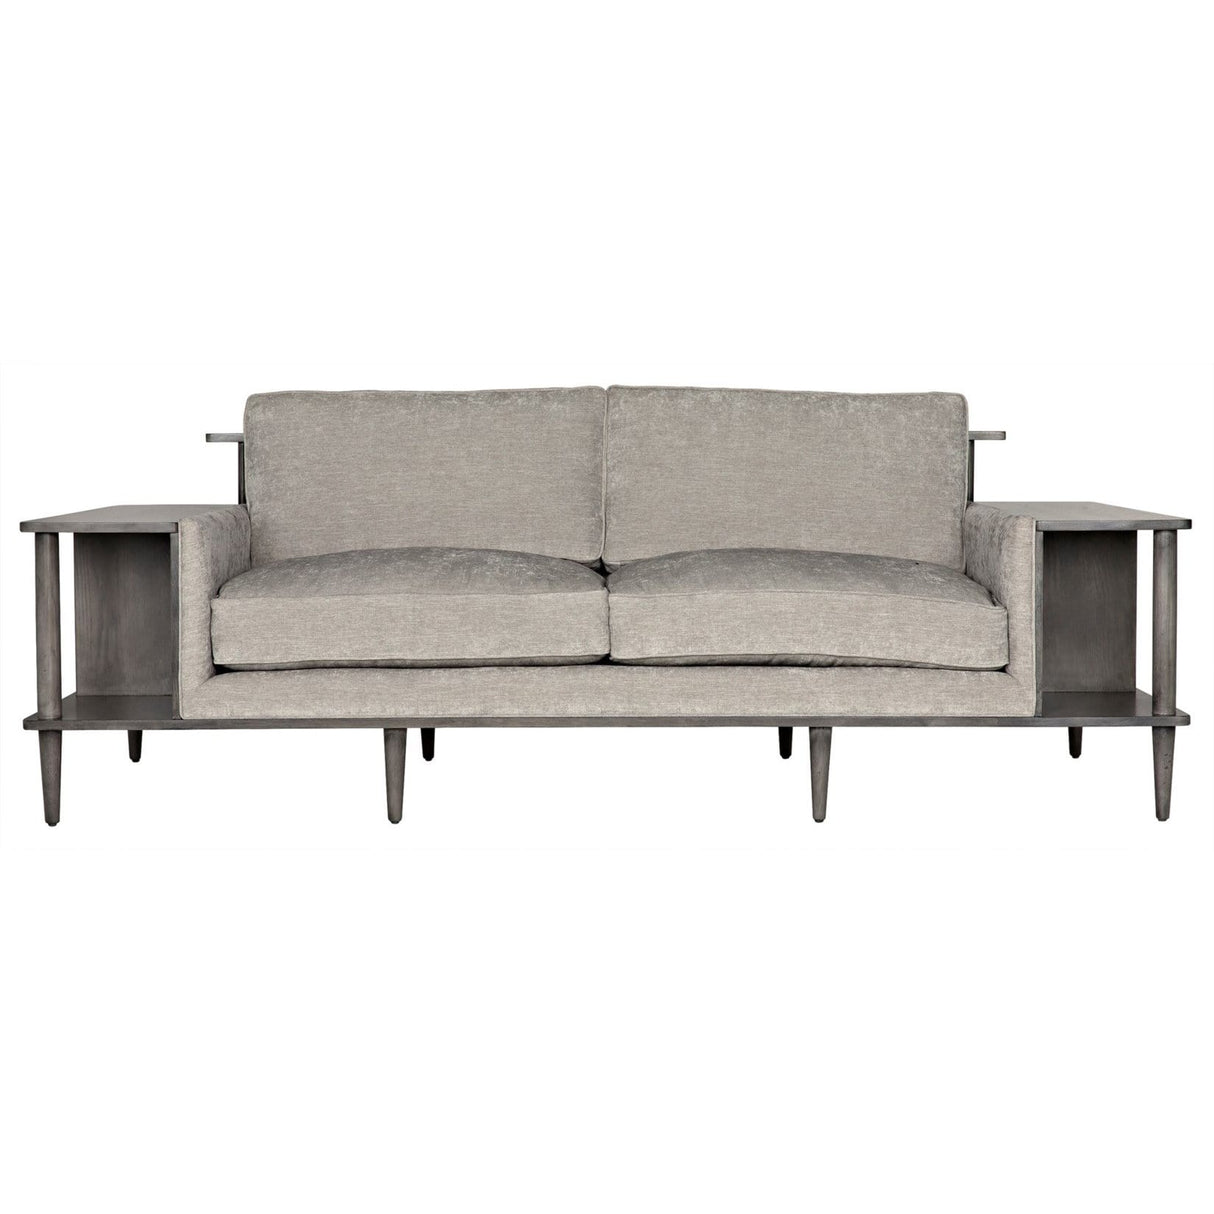 CFC Marshall Sofa Furniture cfc-UP148-grey-shellac